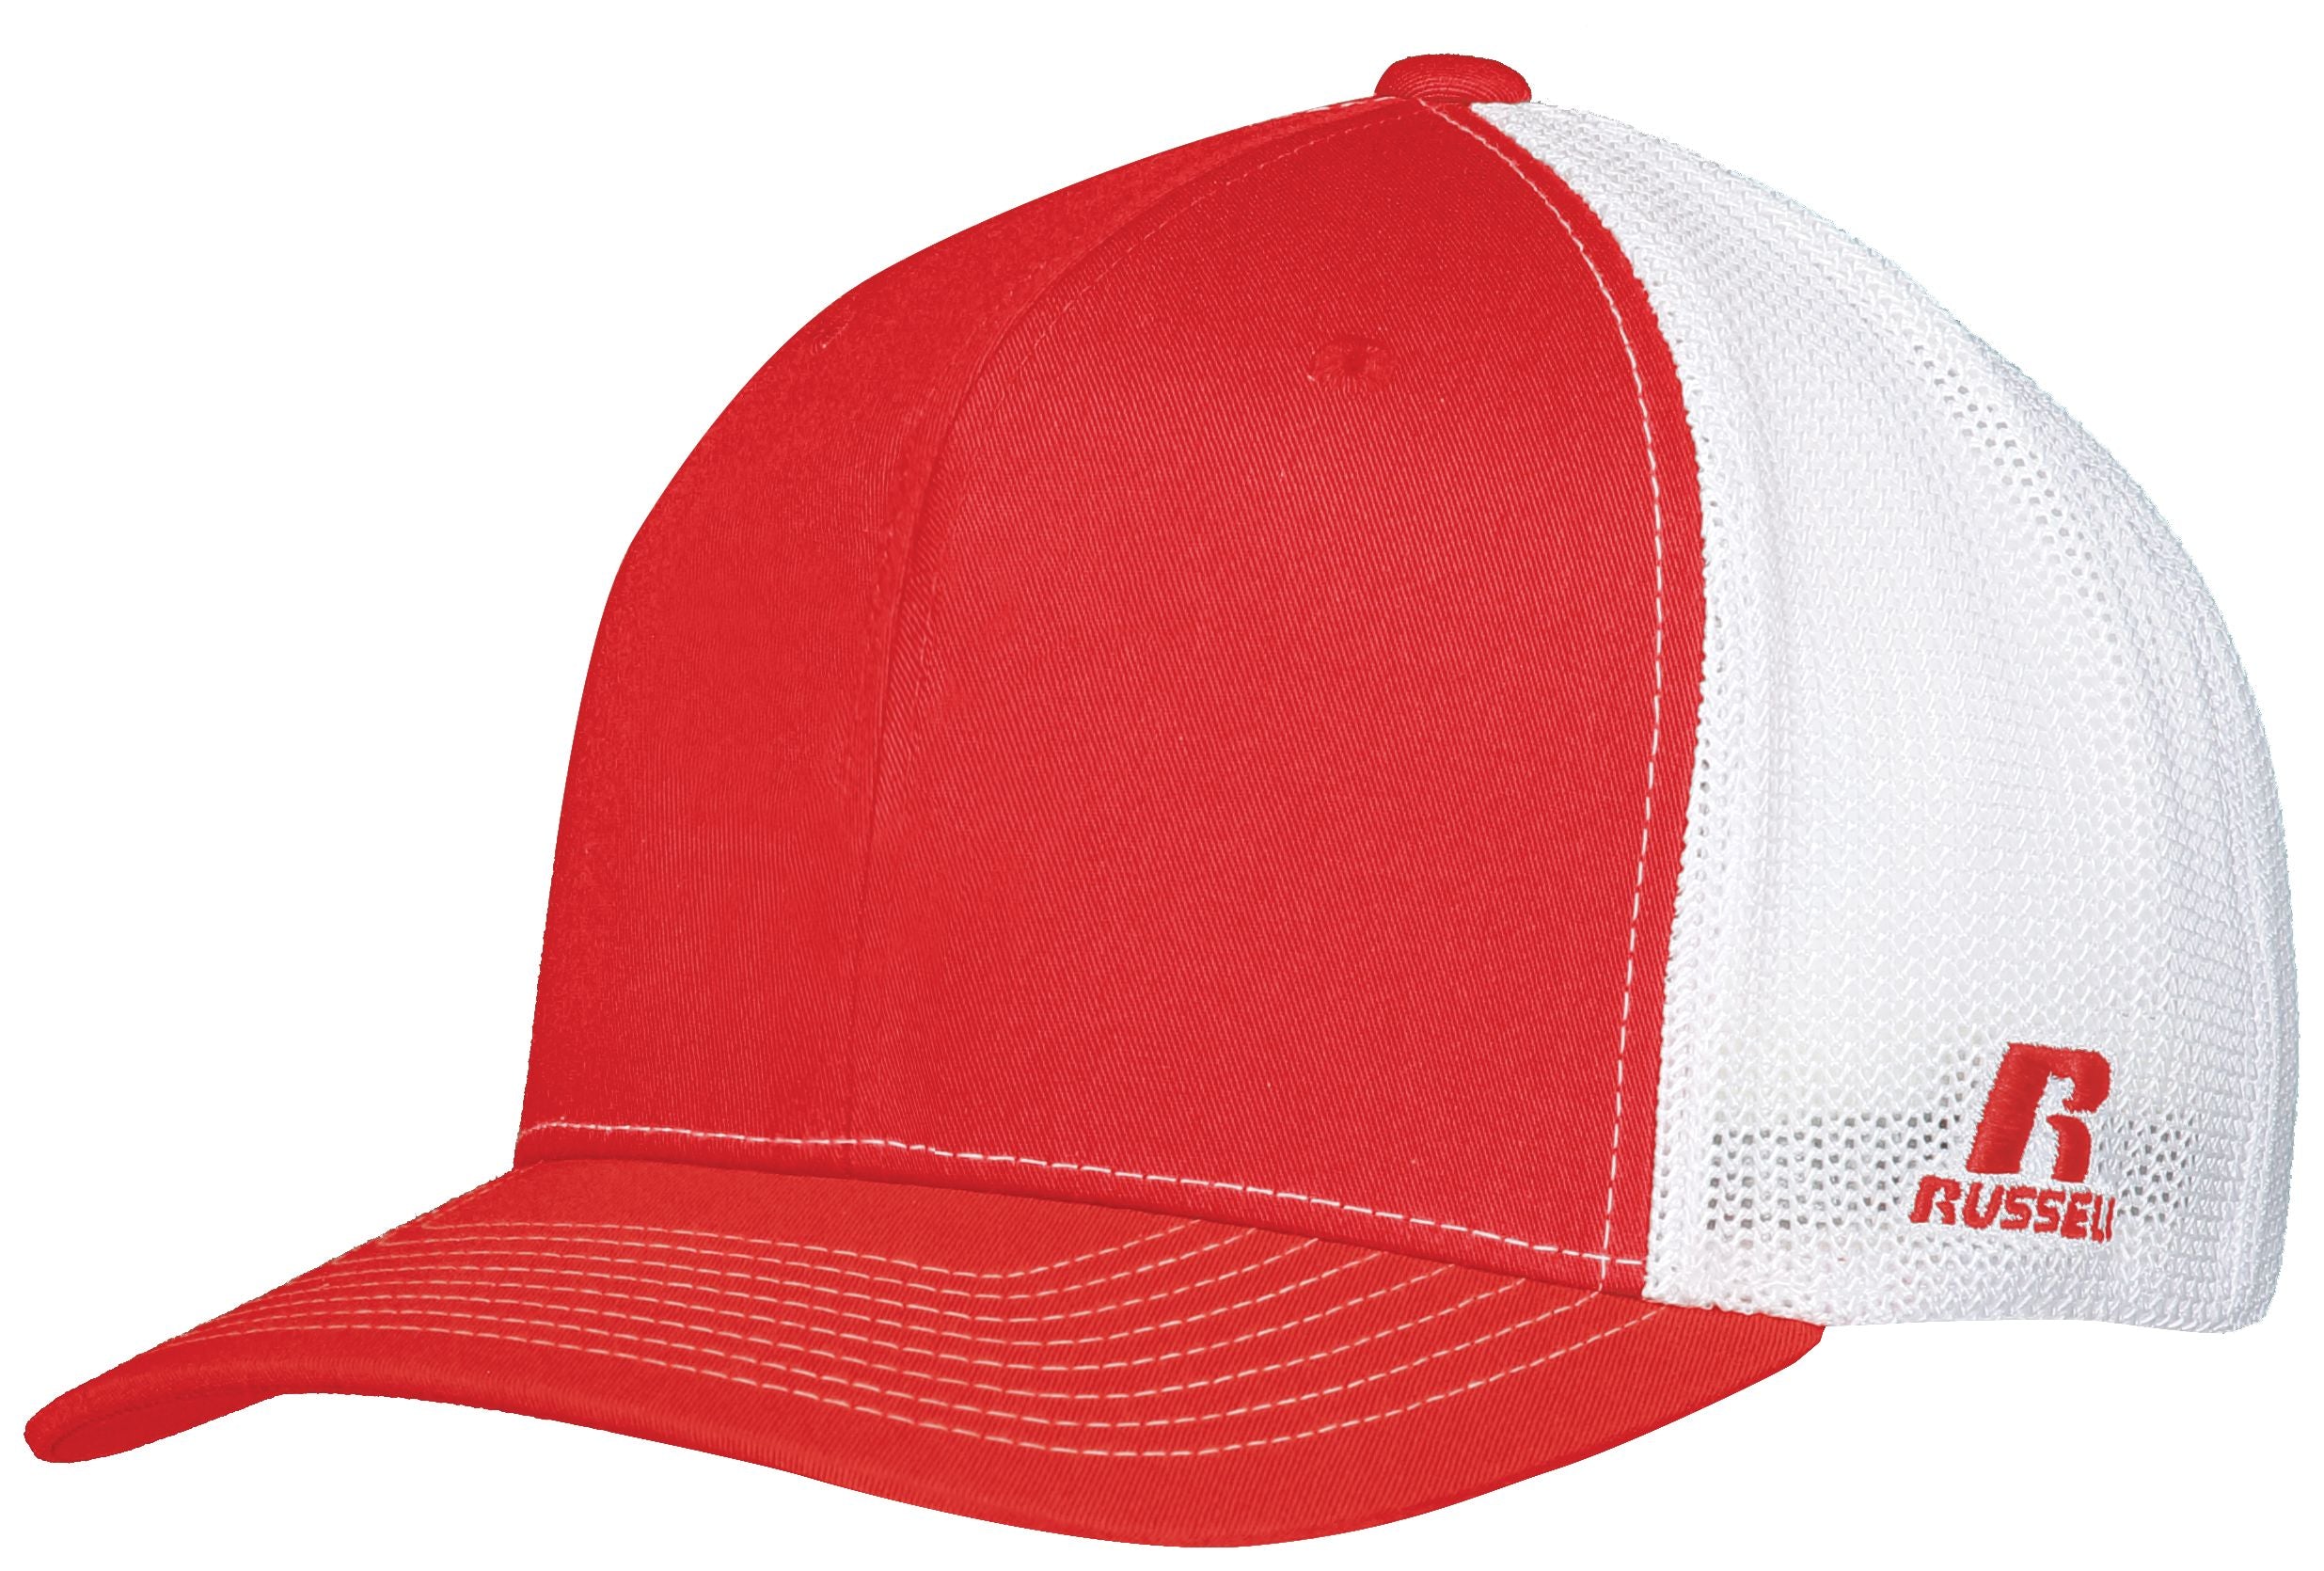 Russell Athletic Flexfit Twill Mesh Cap in True Red/White  -Part of the Adult, Headwear, Headwear-Cap, Russell-Athletic-Products product lines at KanaleyCreations.com